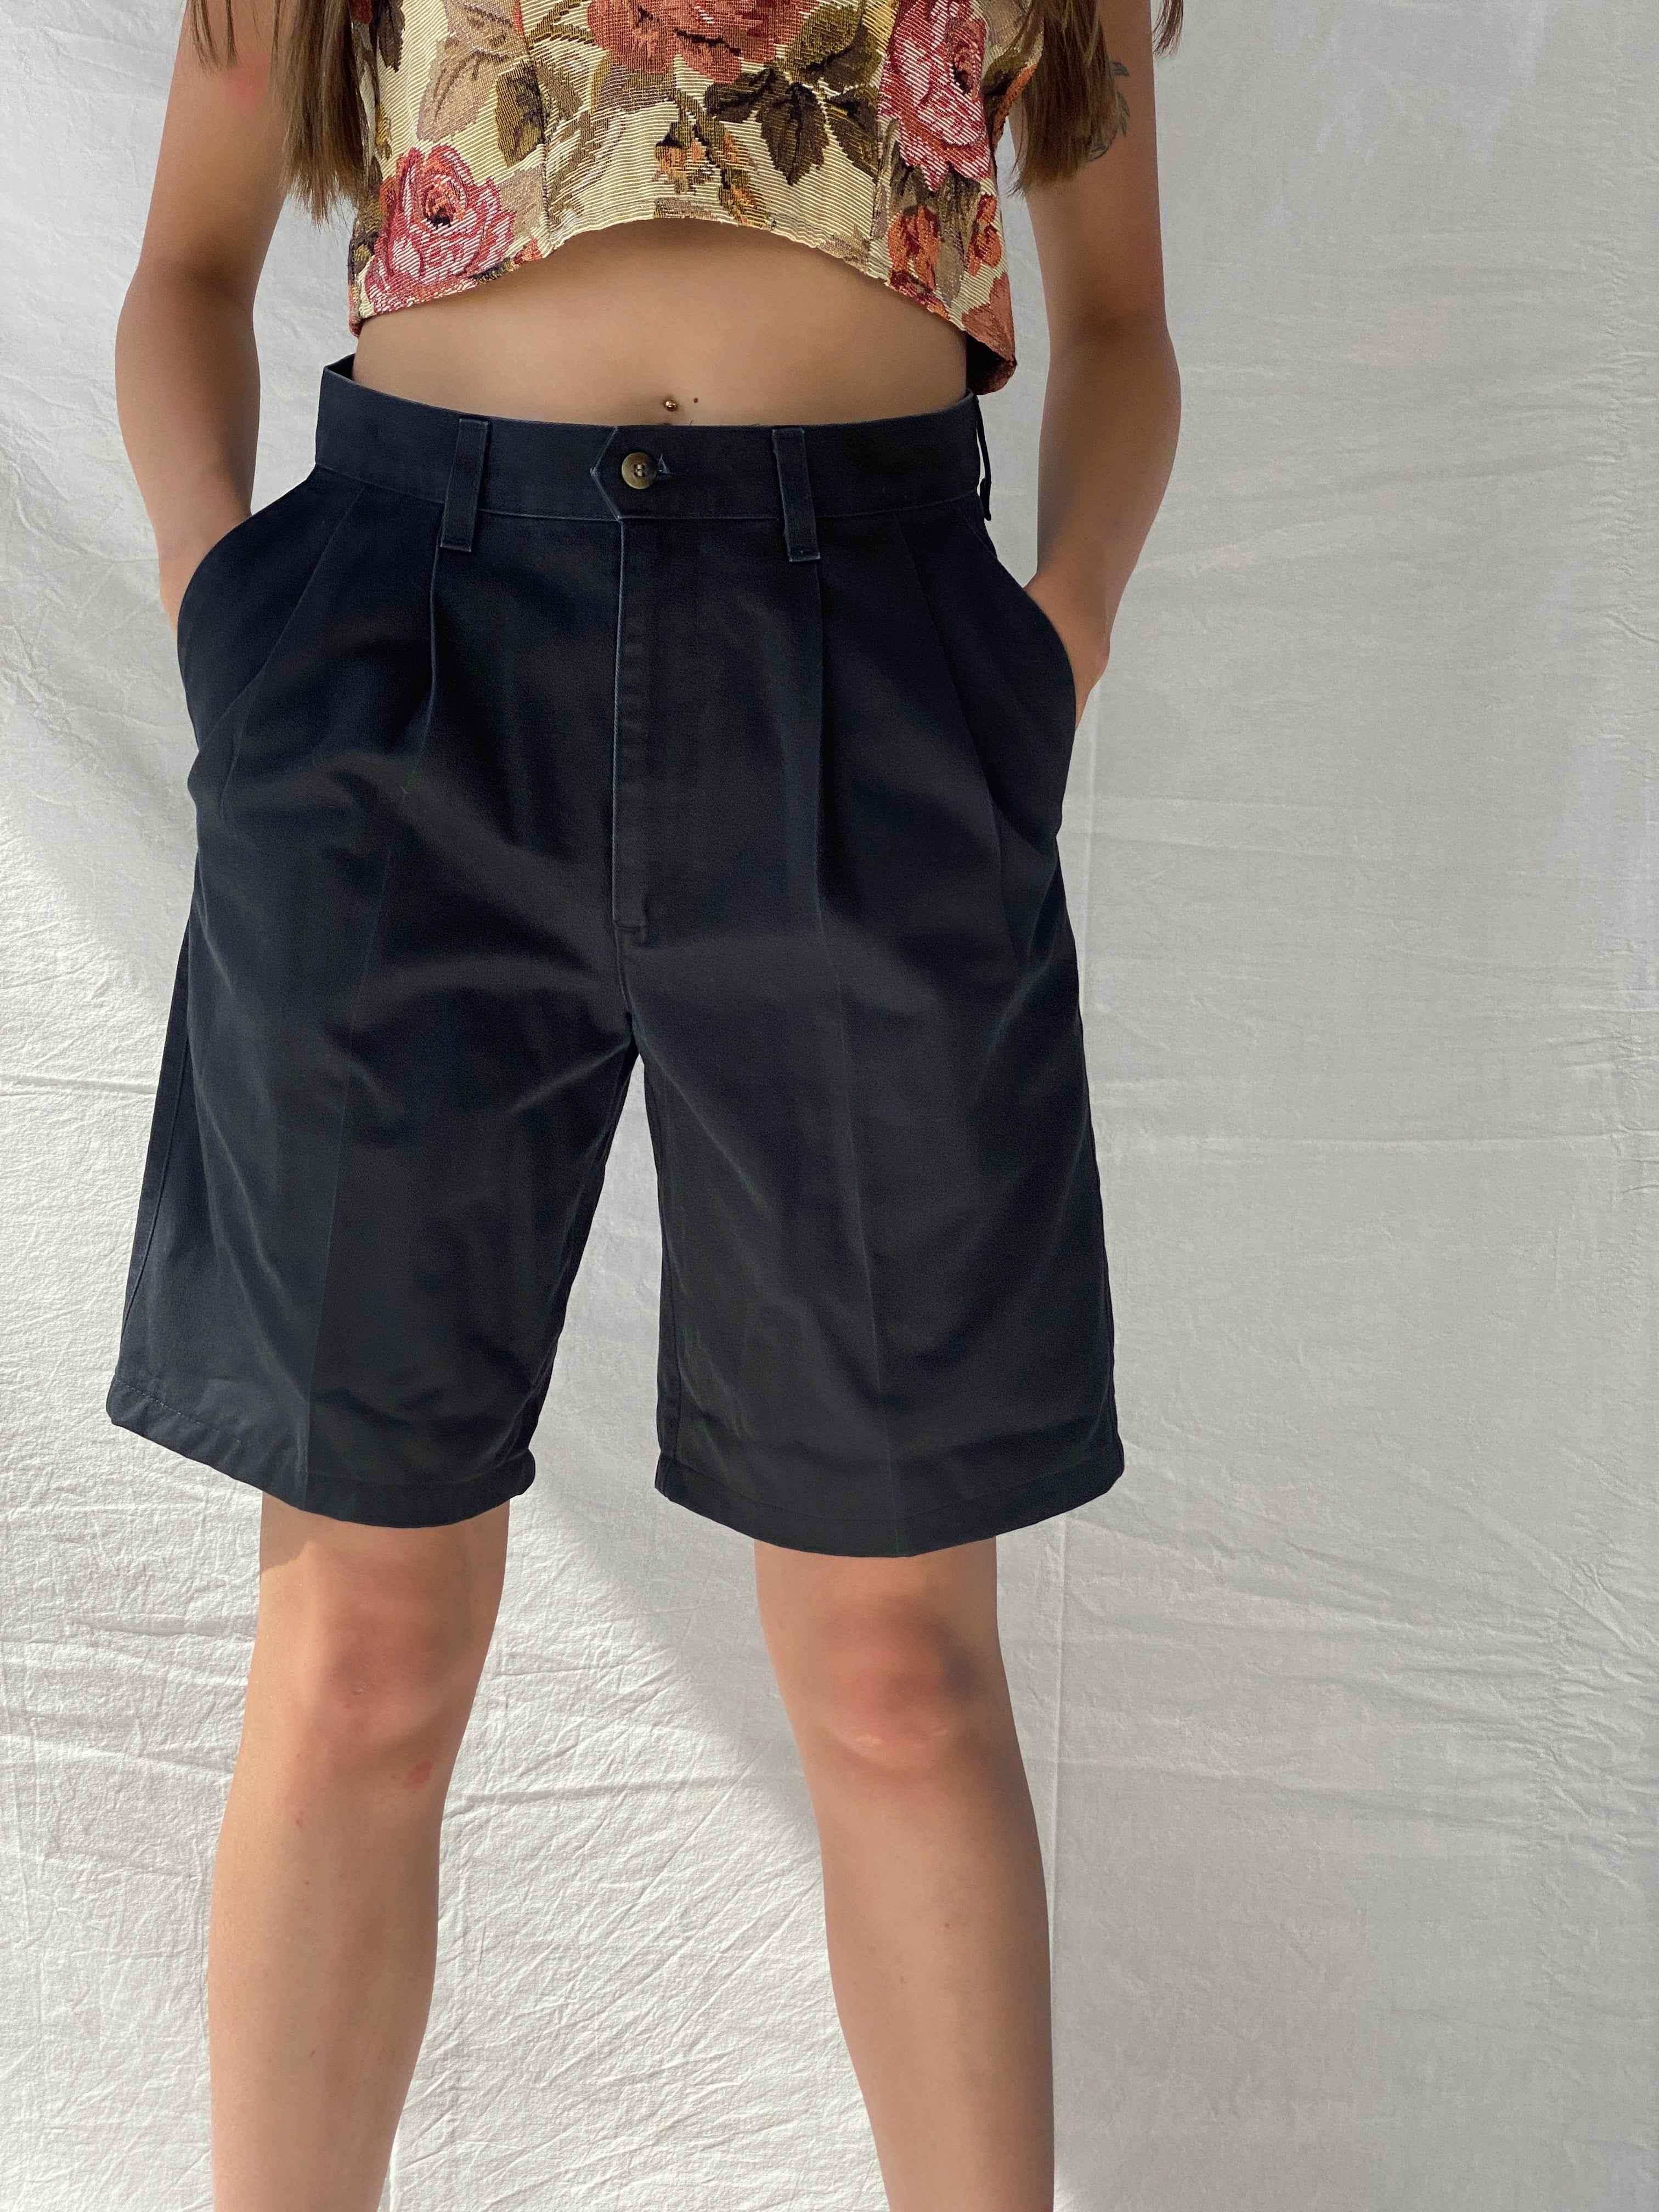 Reworked Dockers Shorts - Balagan Vintage Shorts 00s, 90s, Mira